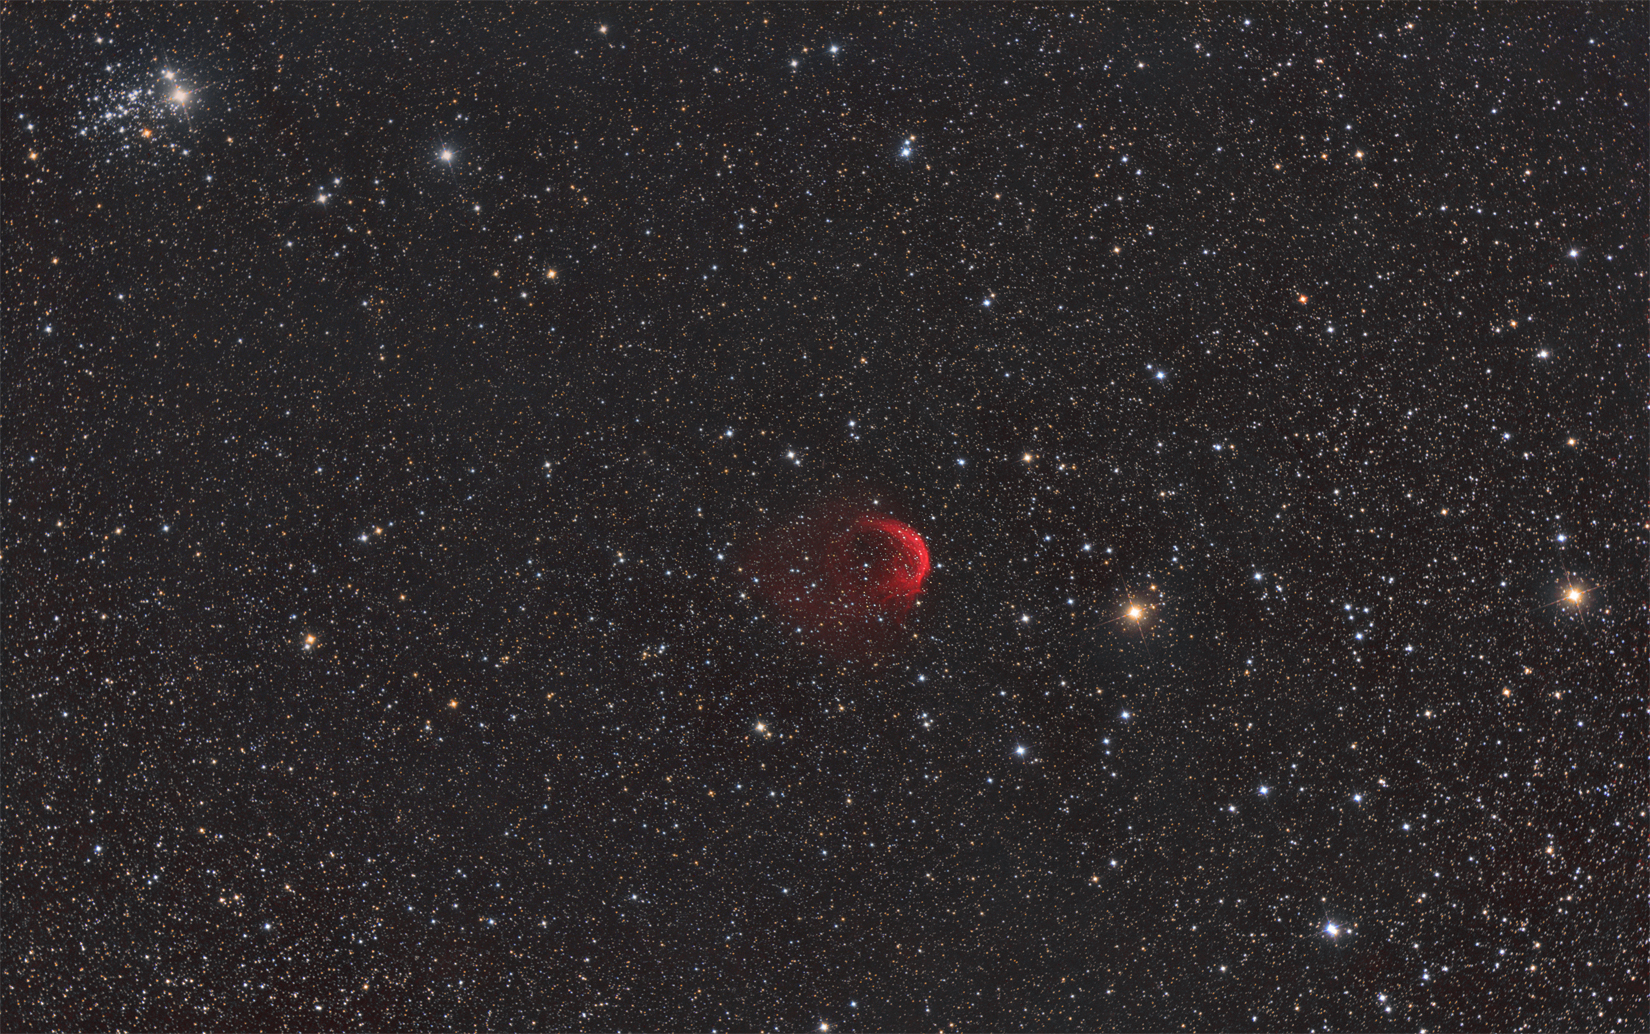 Sh2-188 in Constellation Cassiopeia